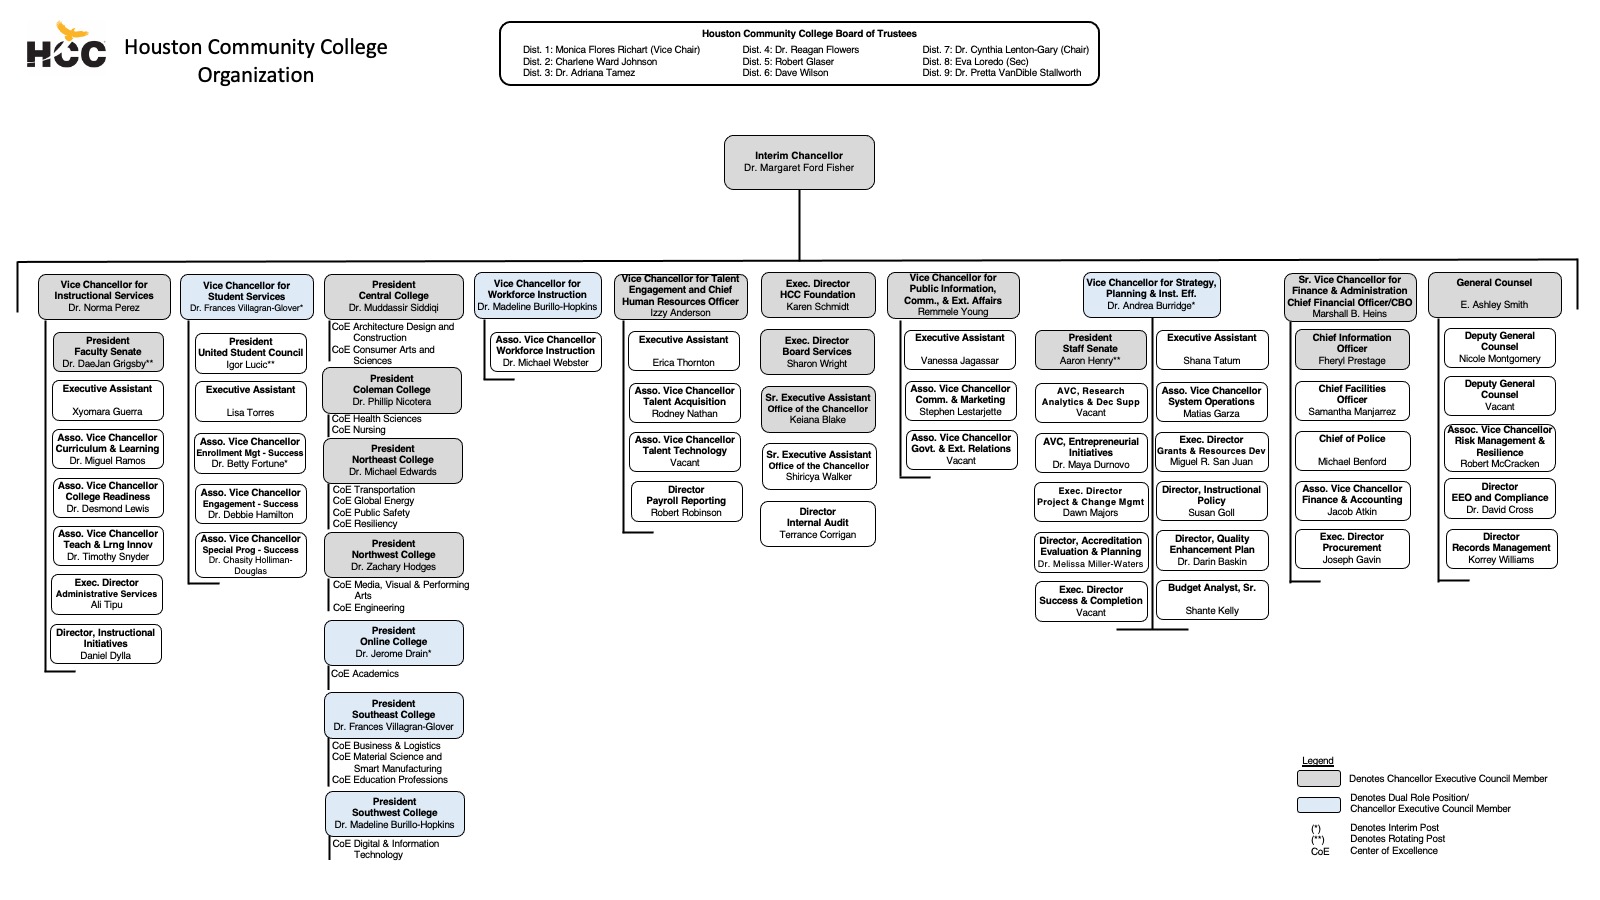 HCC Organizational Chart